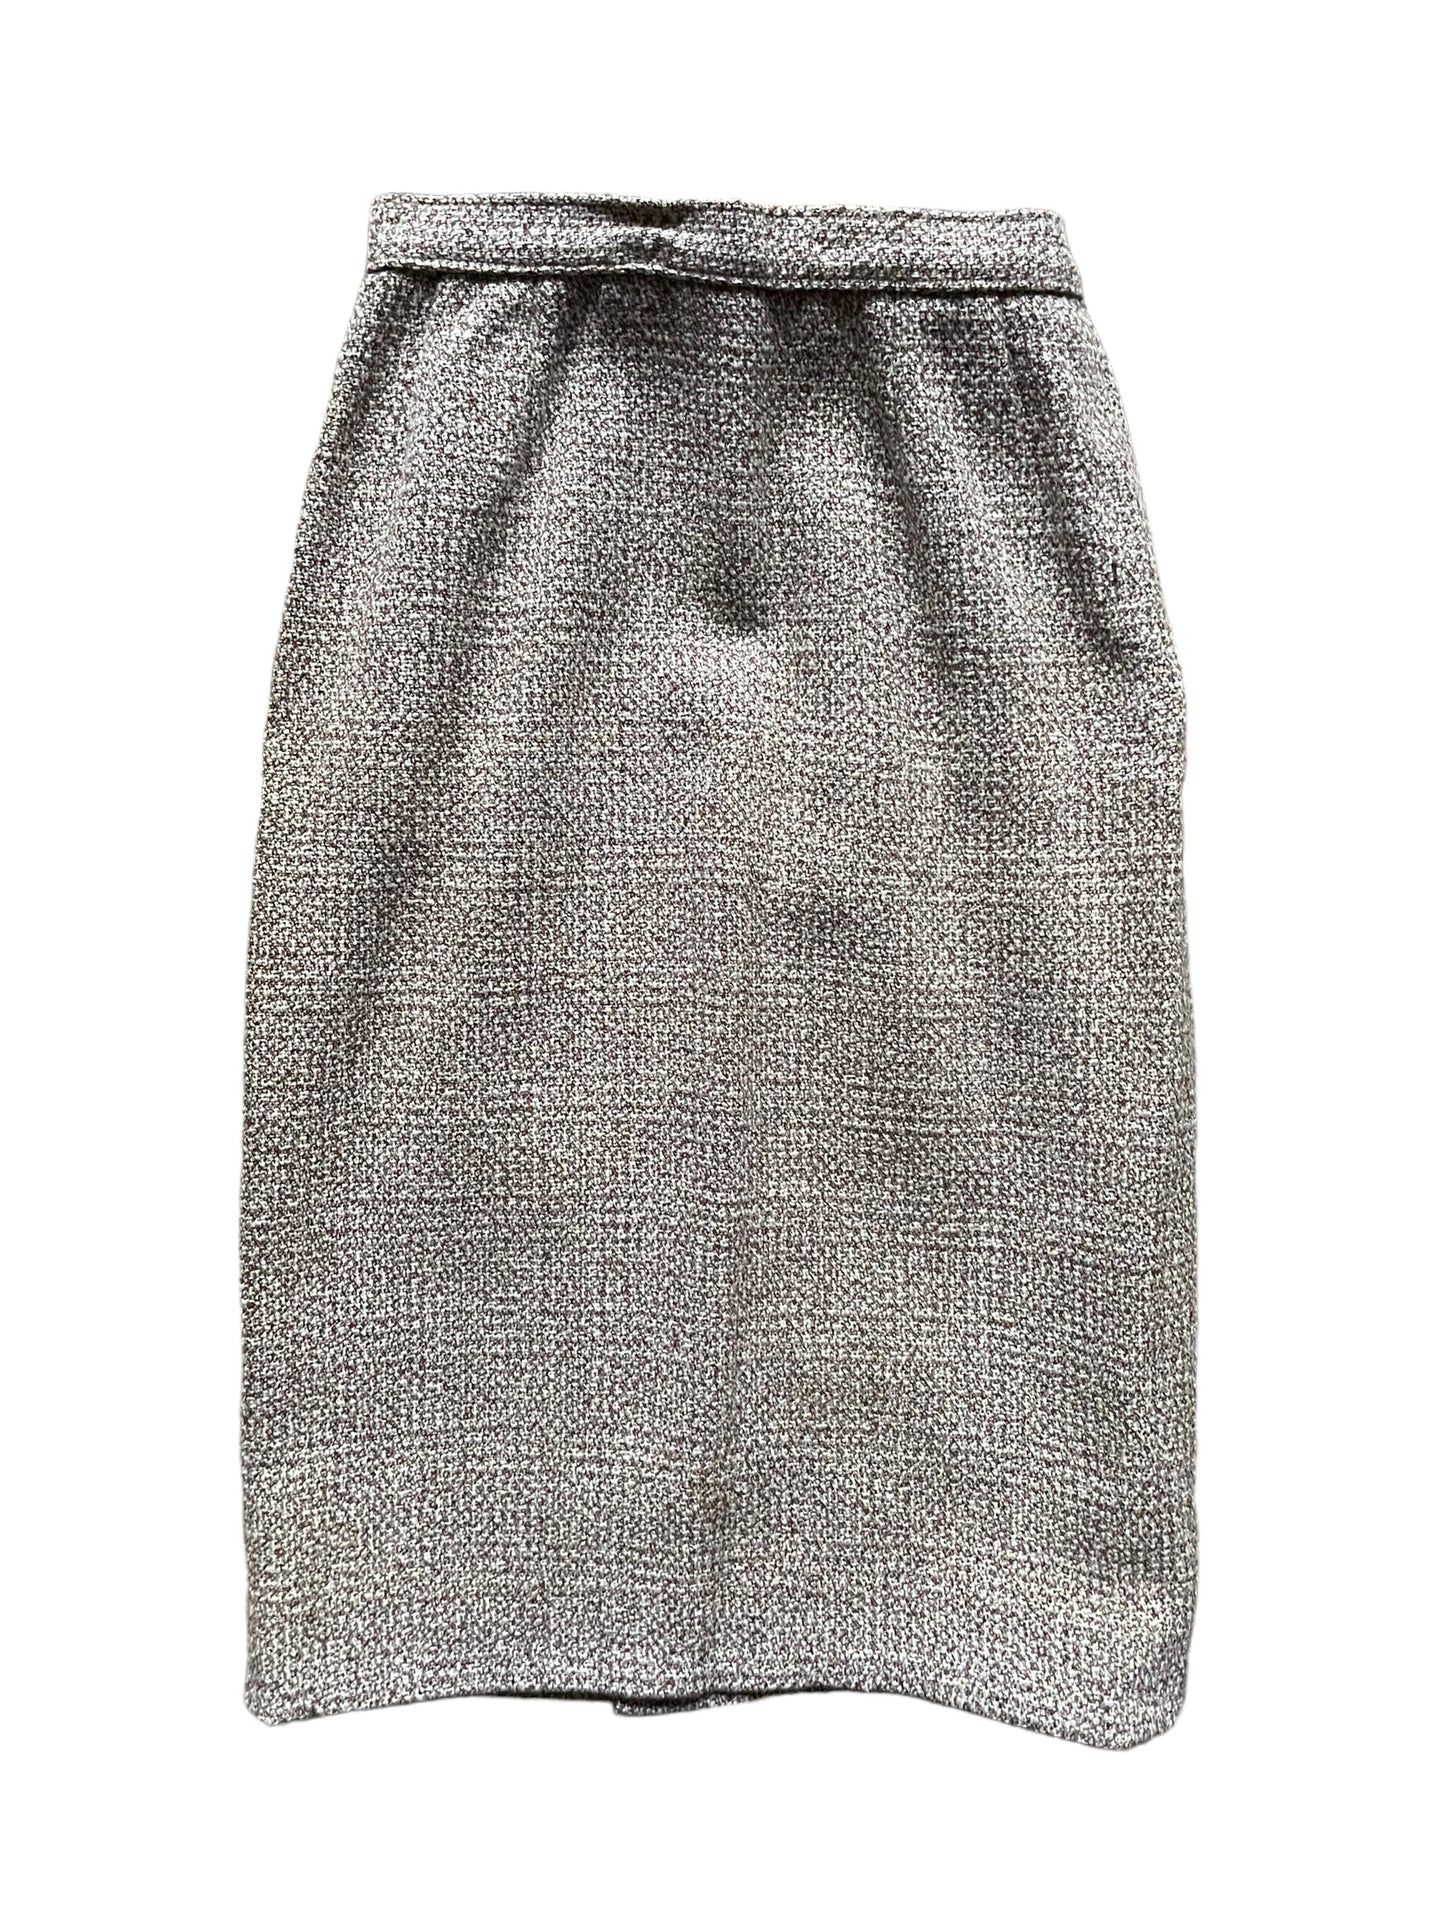 Full front of skirtVintage 1950s Wool Skirt and Top Set SZ M  |  Barn Owl Vintage Skirt Sets | Seattle Vintage Skirts